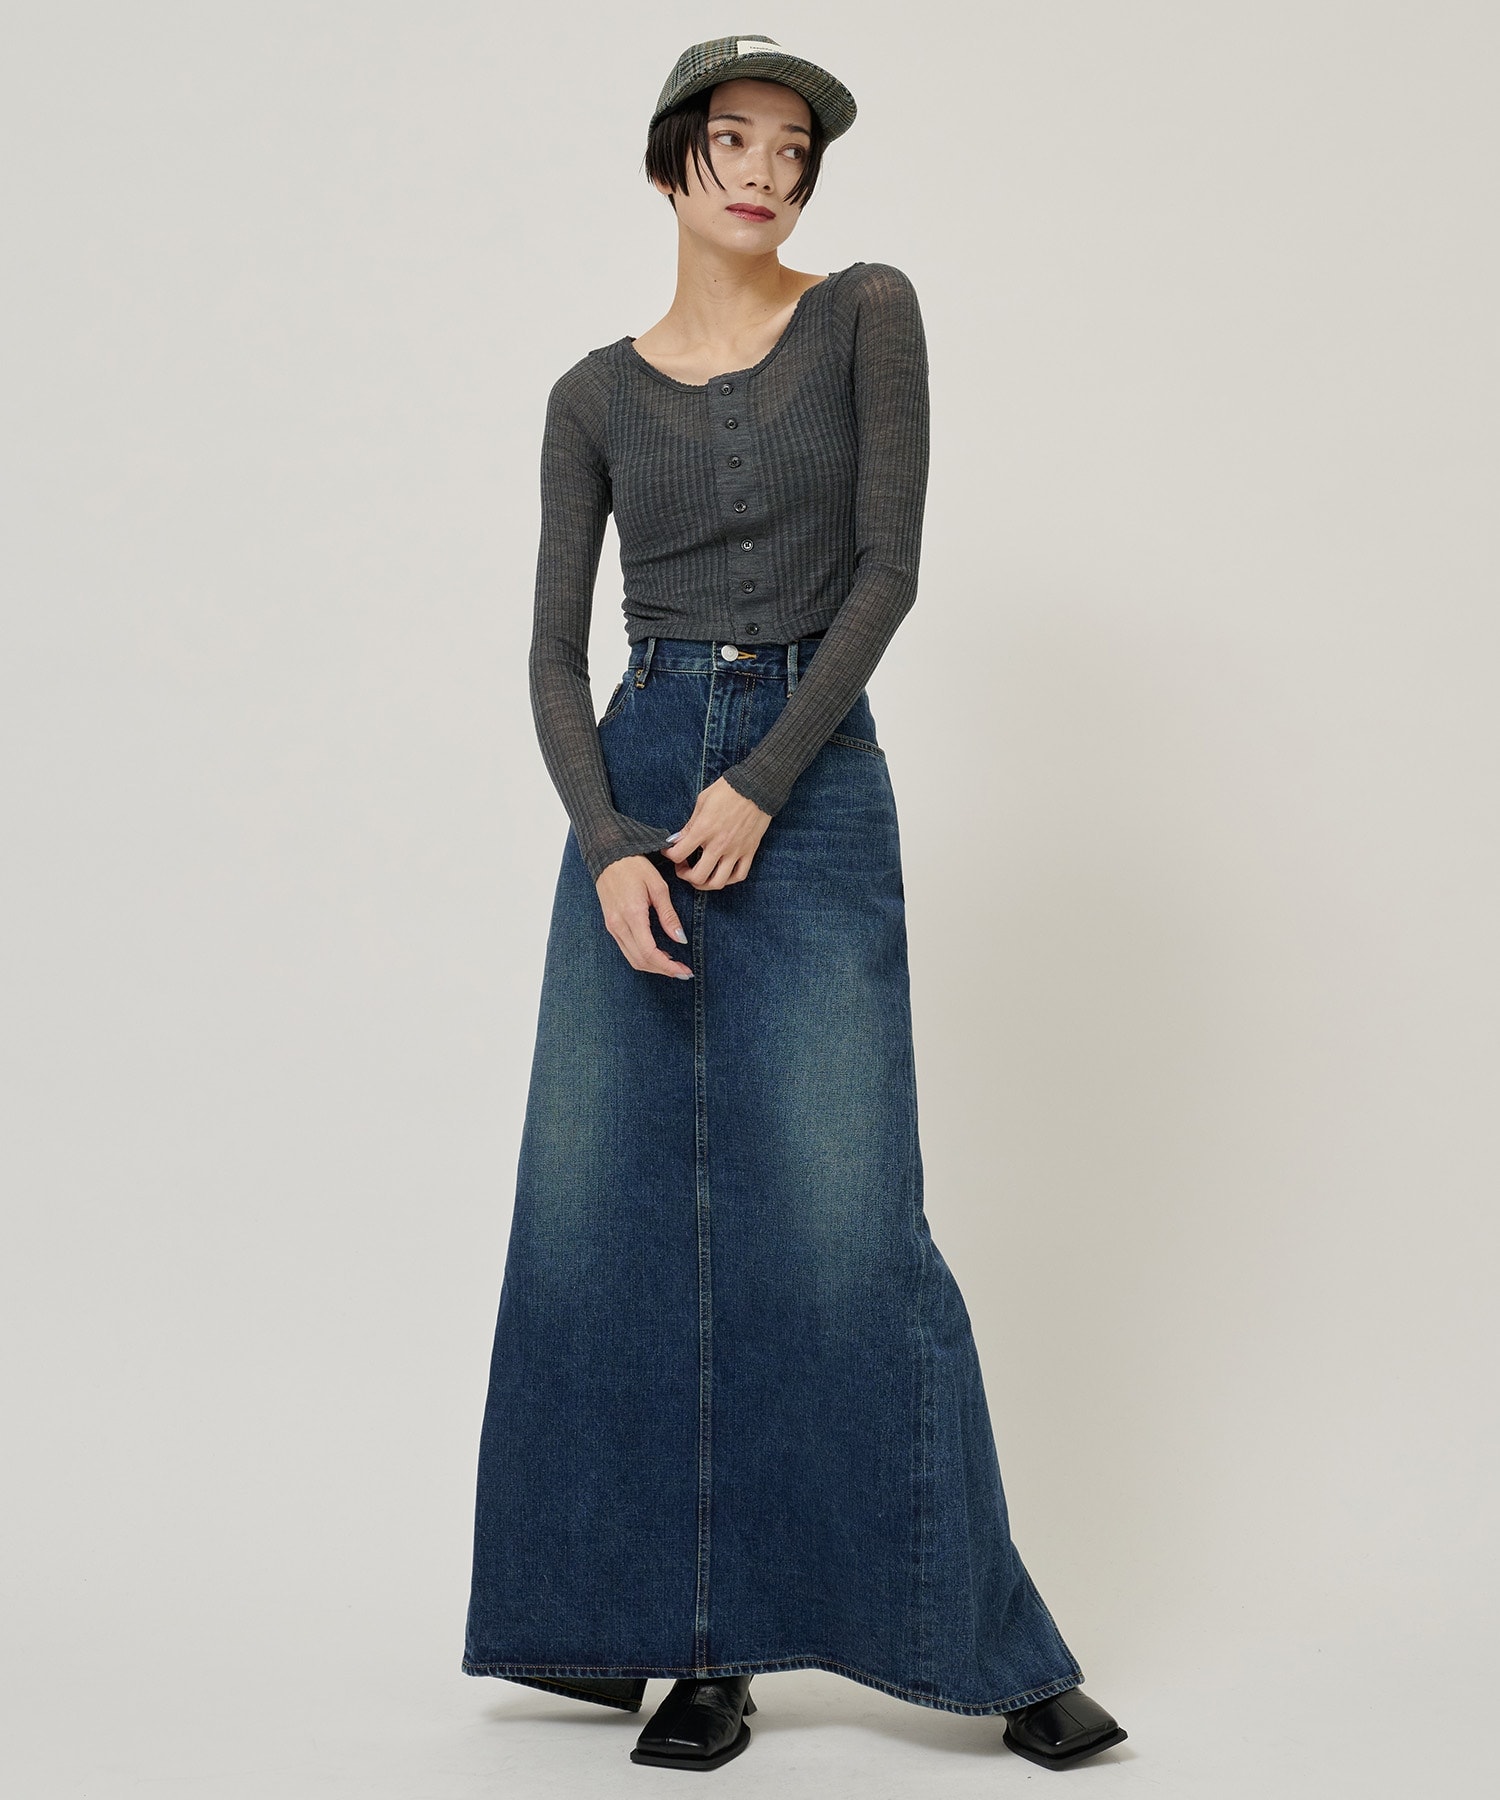 selvedge bleach denim tight skirt(36 BLUE): beautiful people